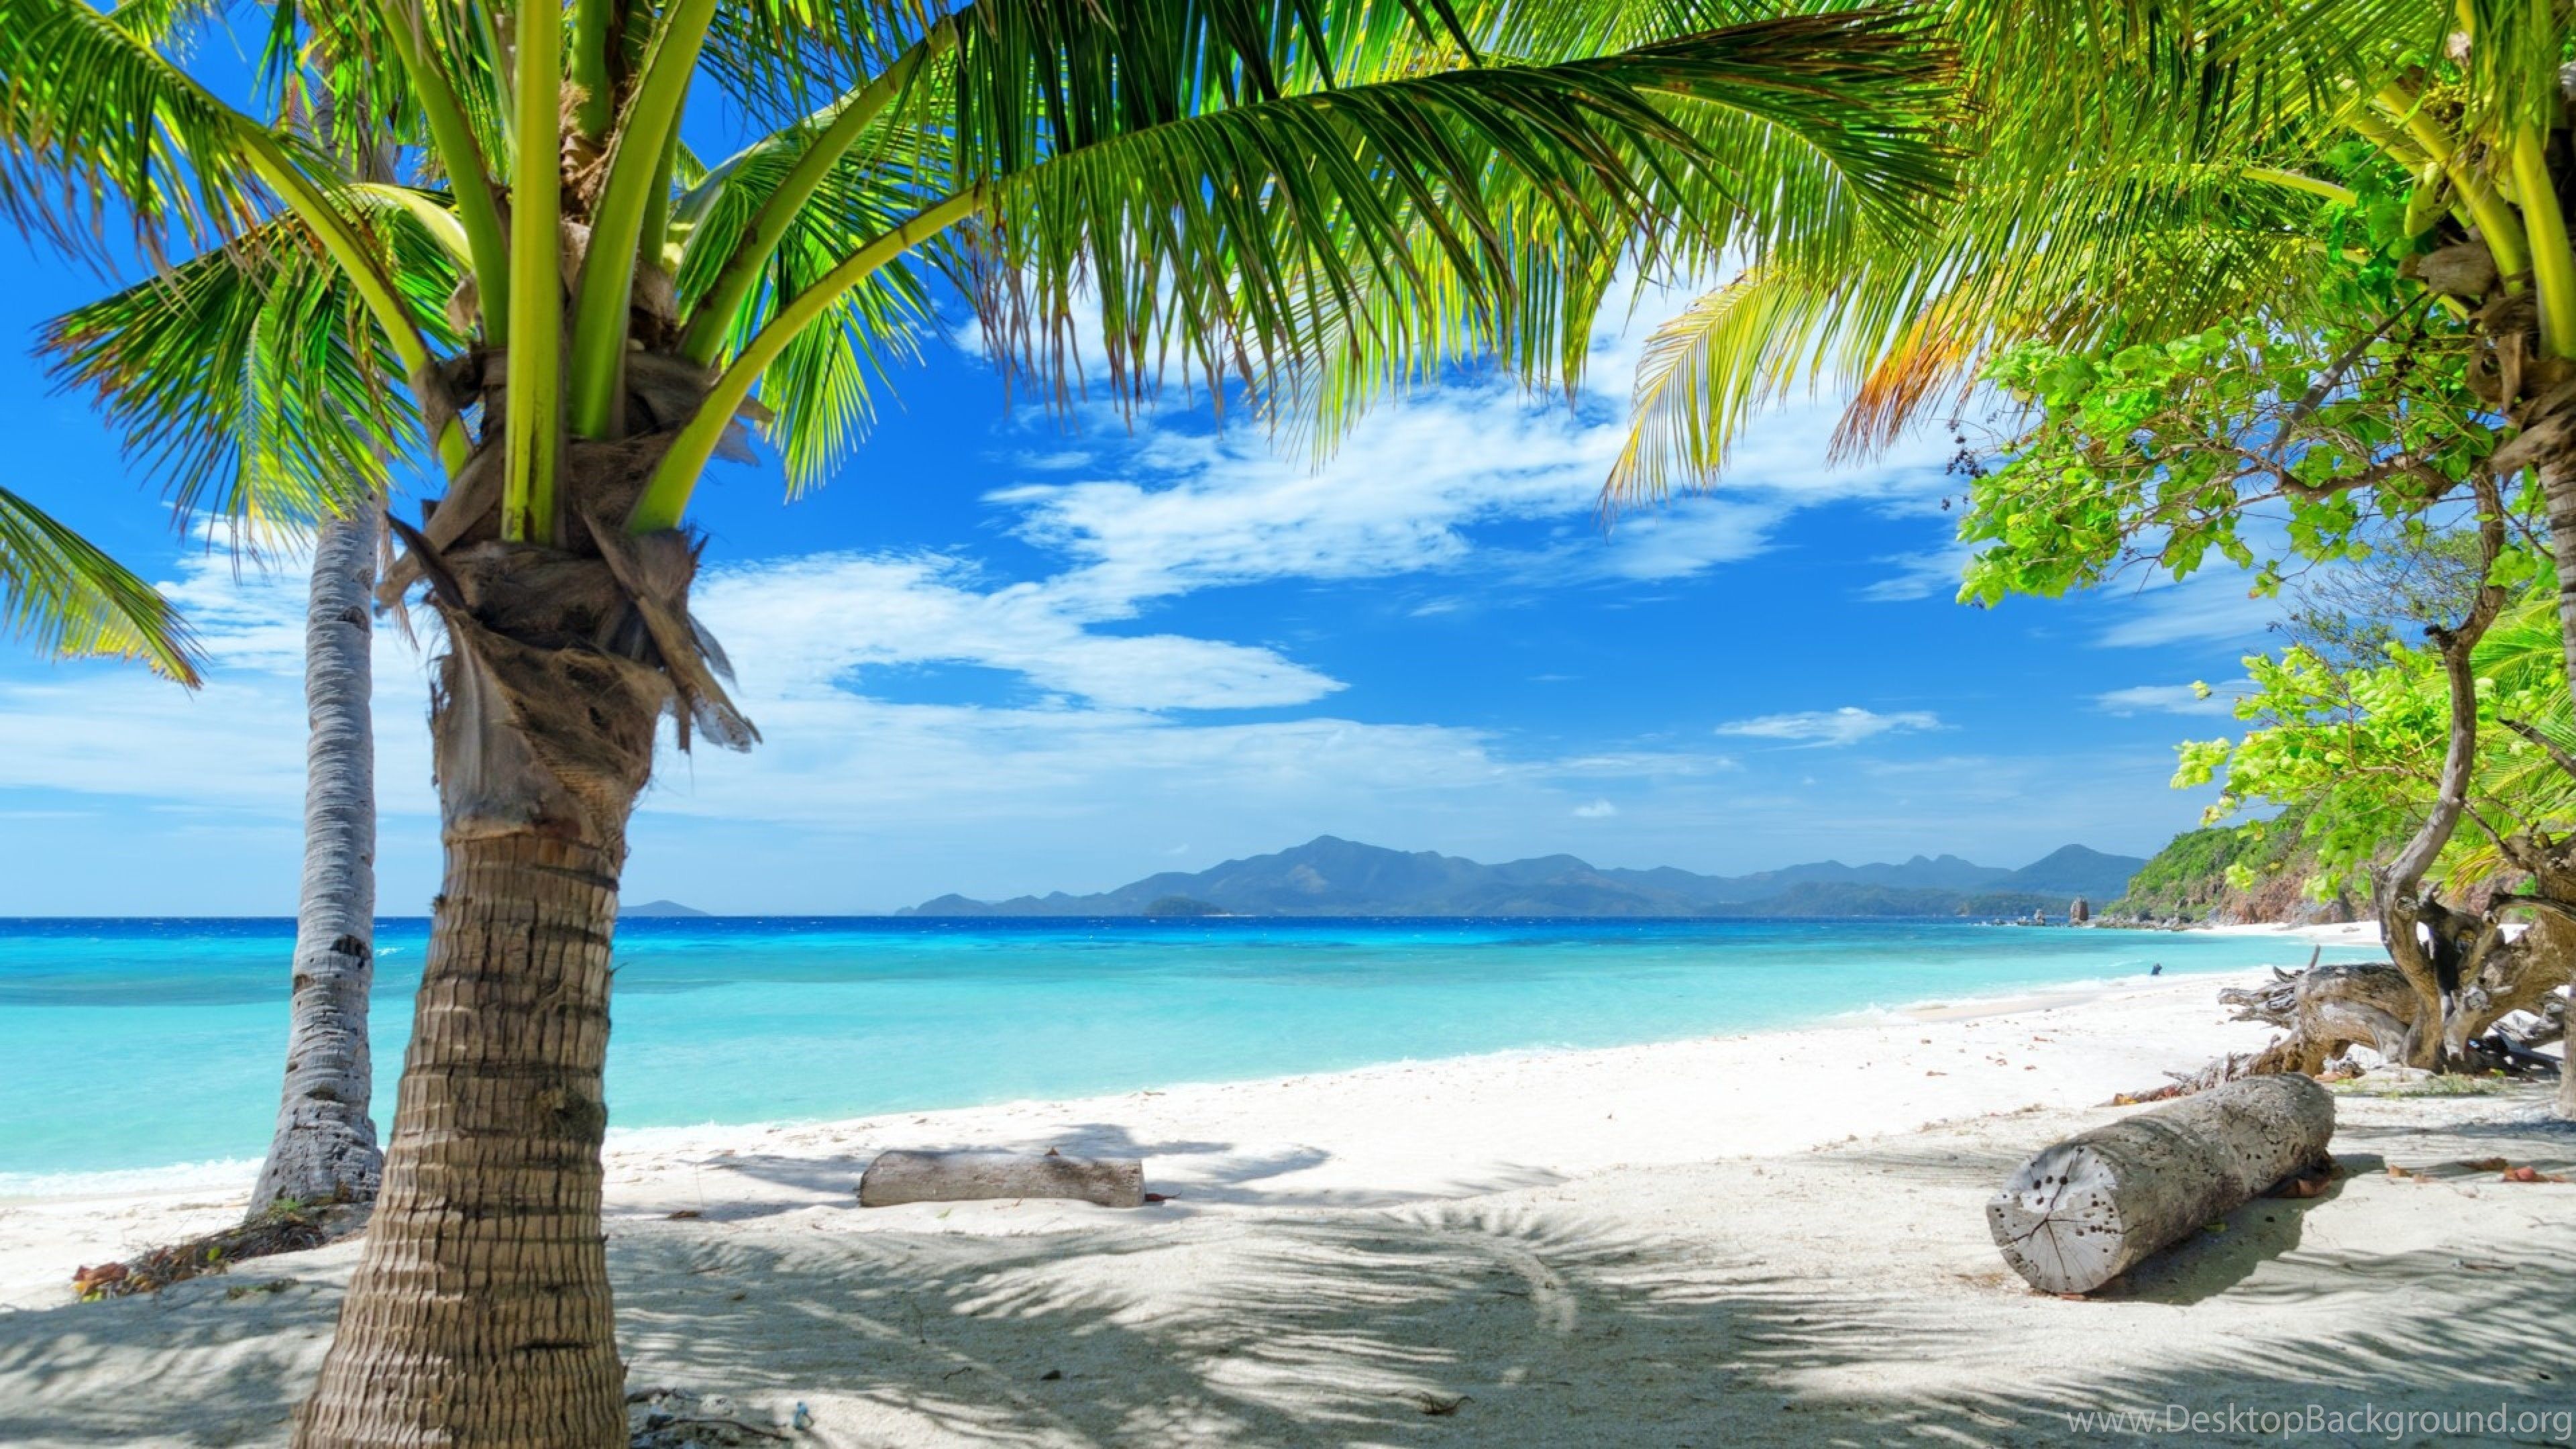 Download Wallpapers 3840x2160 Tropics, Beach, Sand, Palm Trees 4K ... Desktop Backgrounds